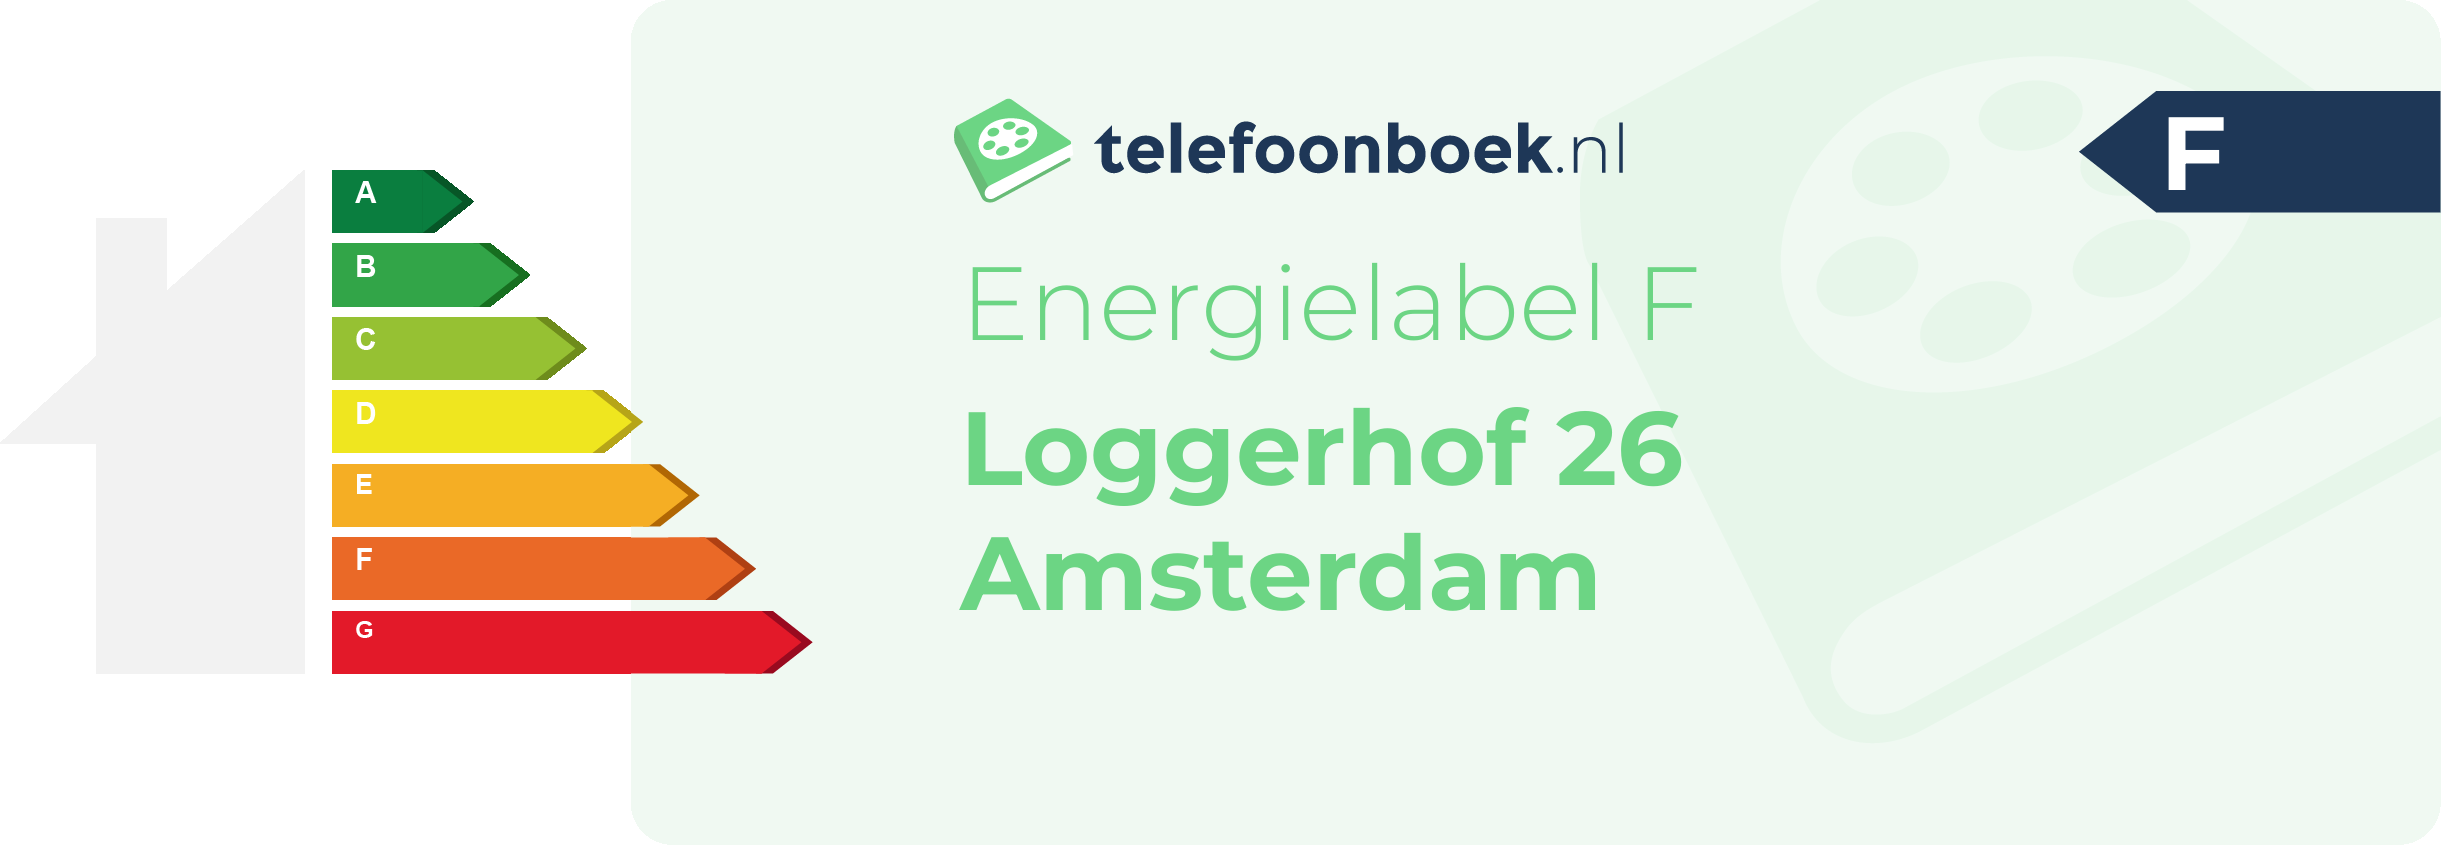 Energielabel Loggerhof 26 Amsterdam